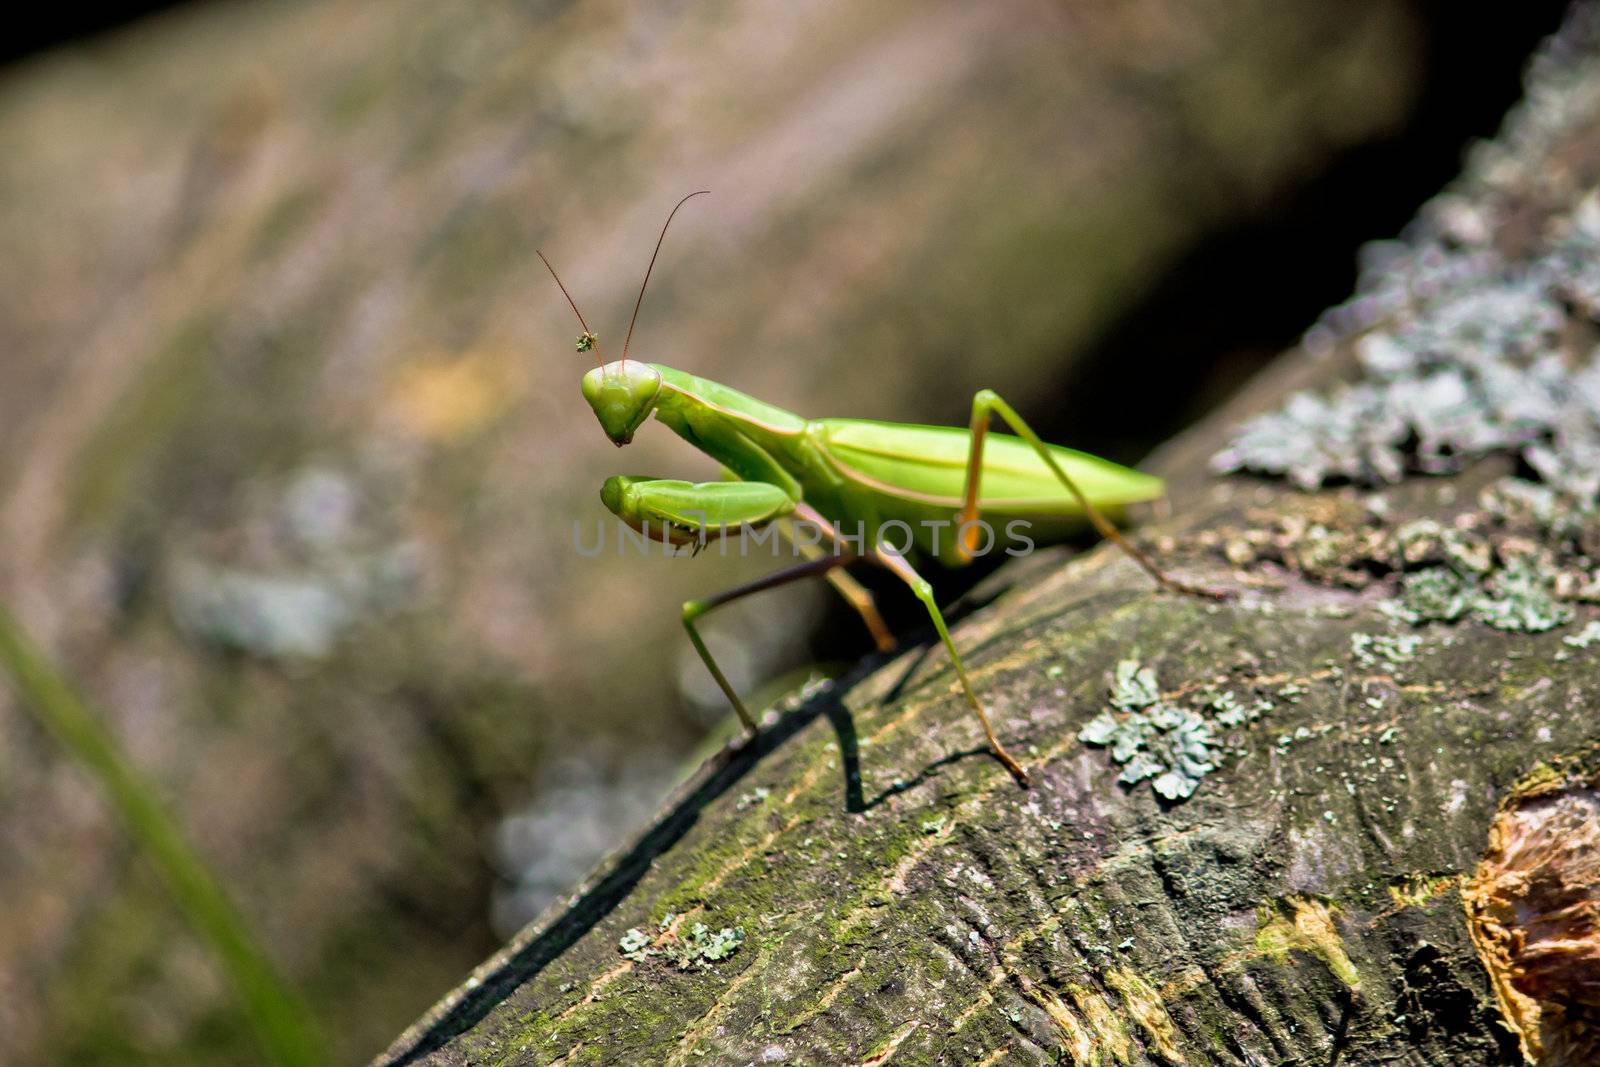 Praying Mantis in natural environment by xbrchx